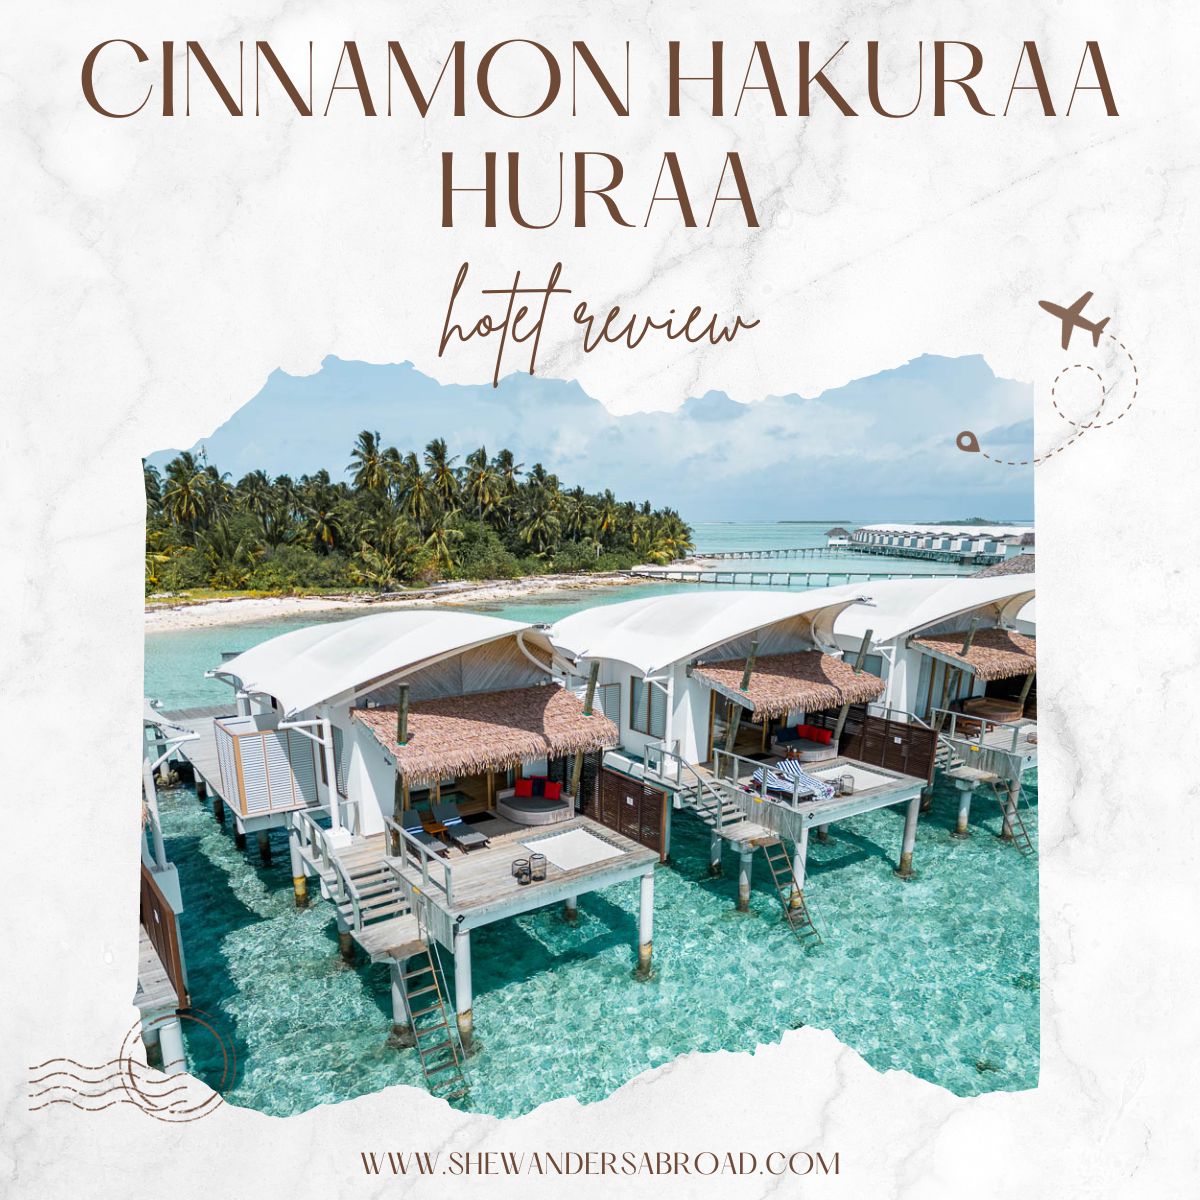 Cinnamon Hakuraa Huraa Hotel Review